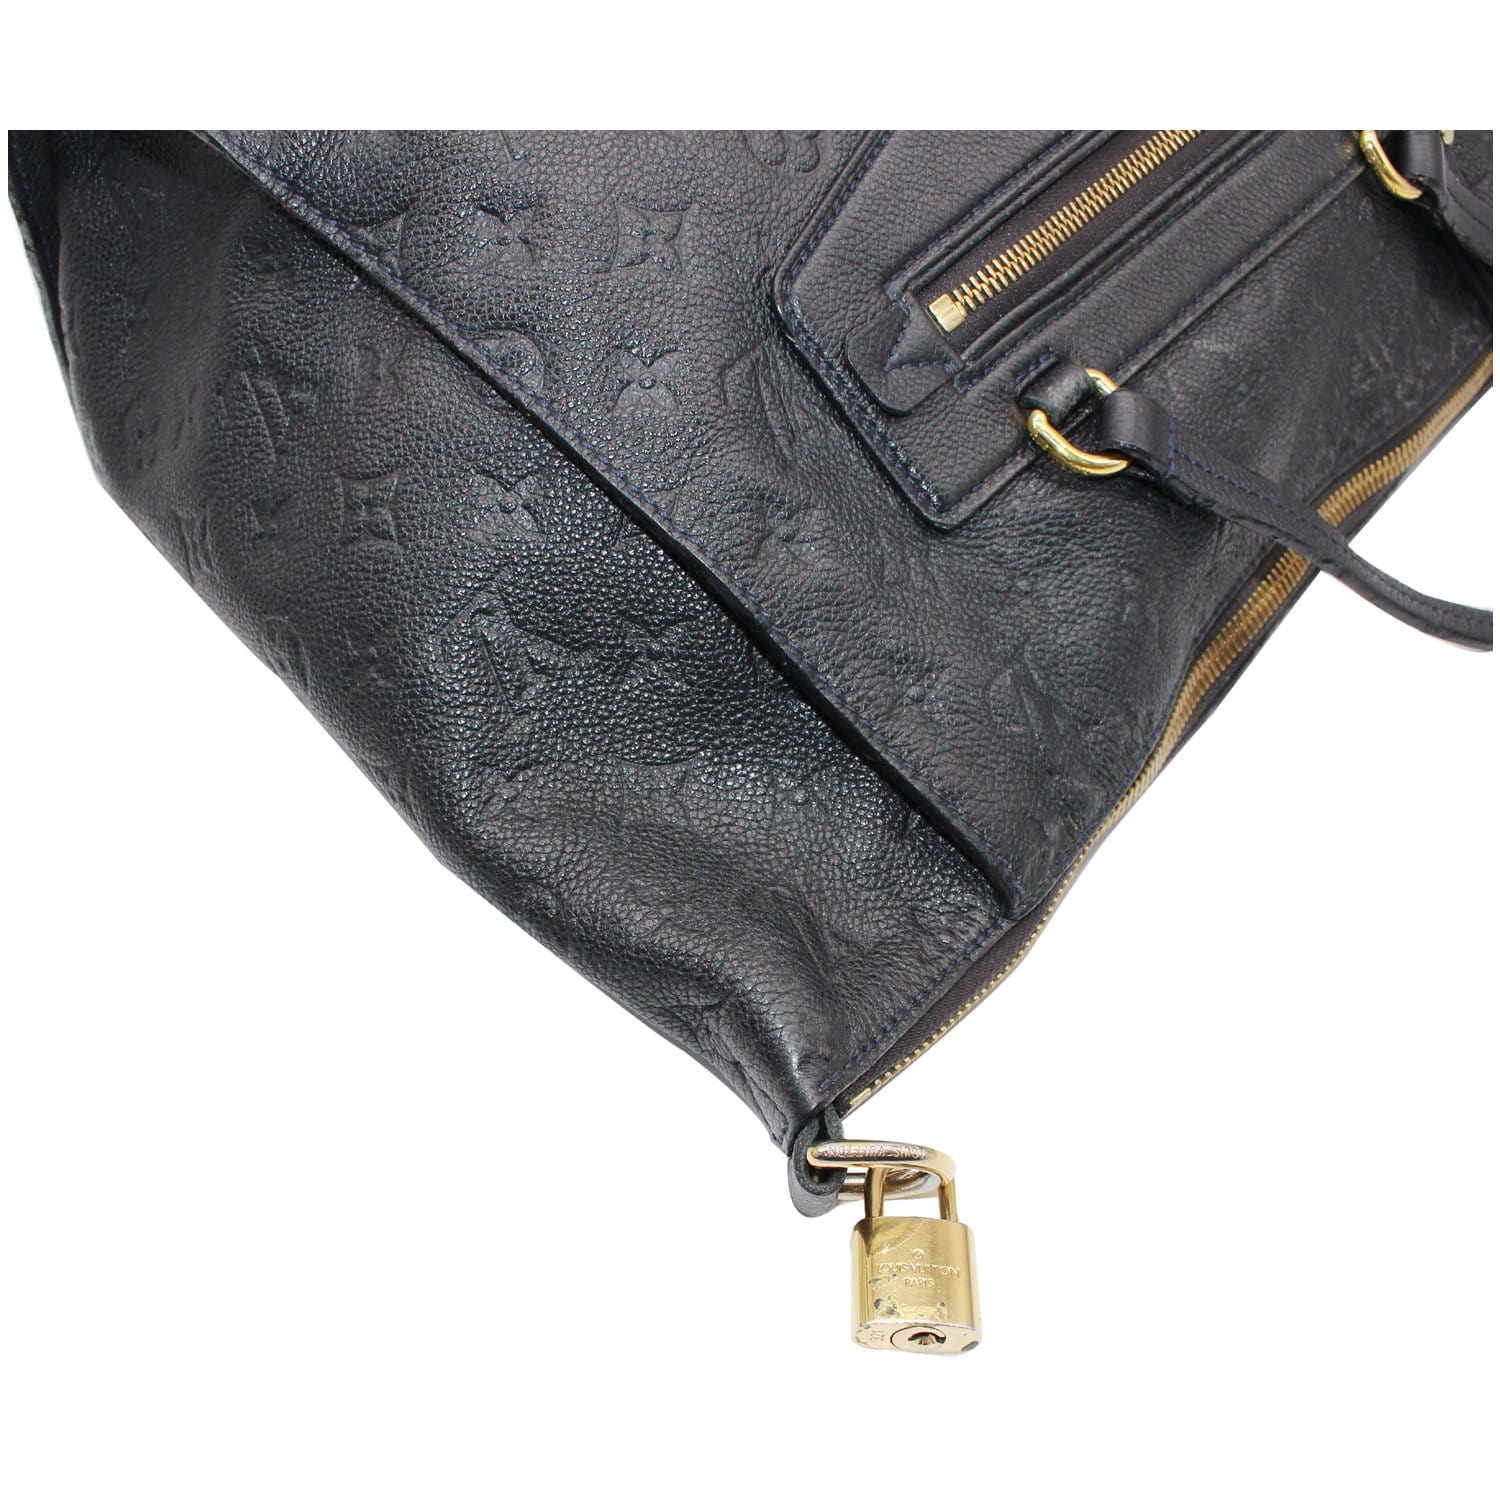 Louis Vuitton Lumineuse PM Bordeaux Monogram Empreinte handbag